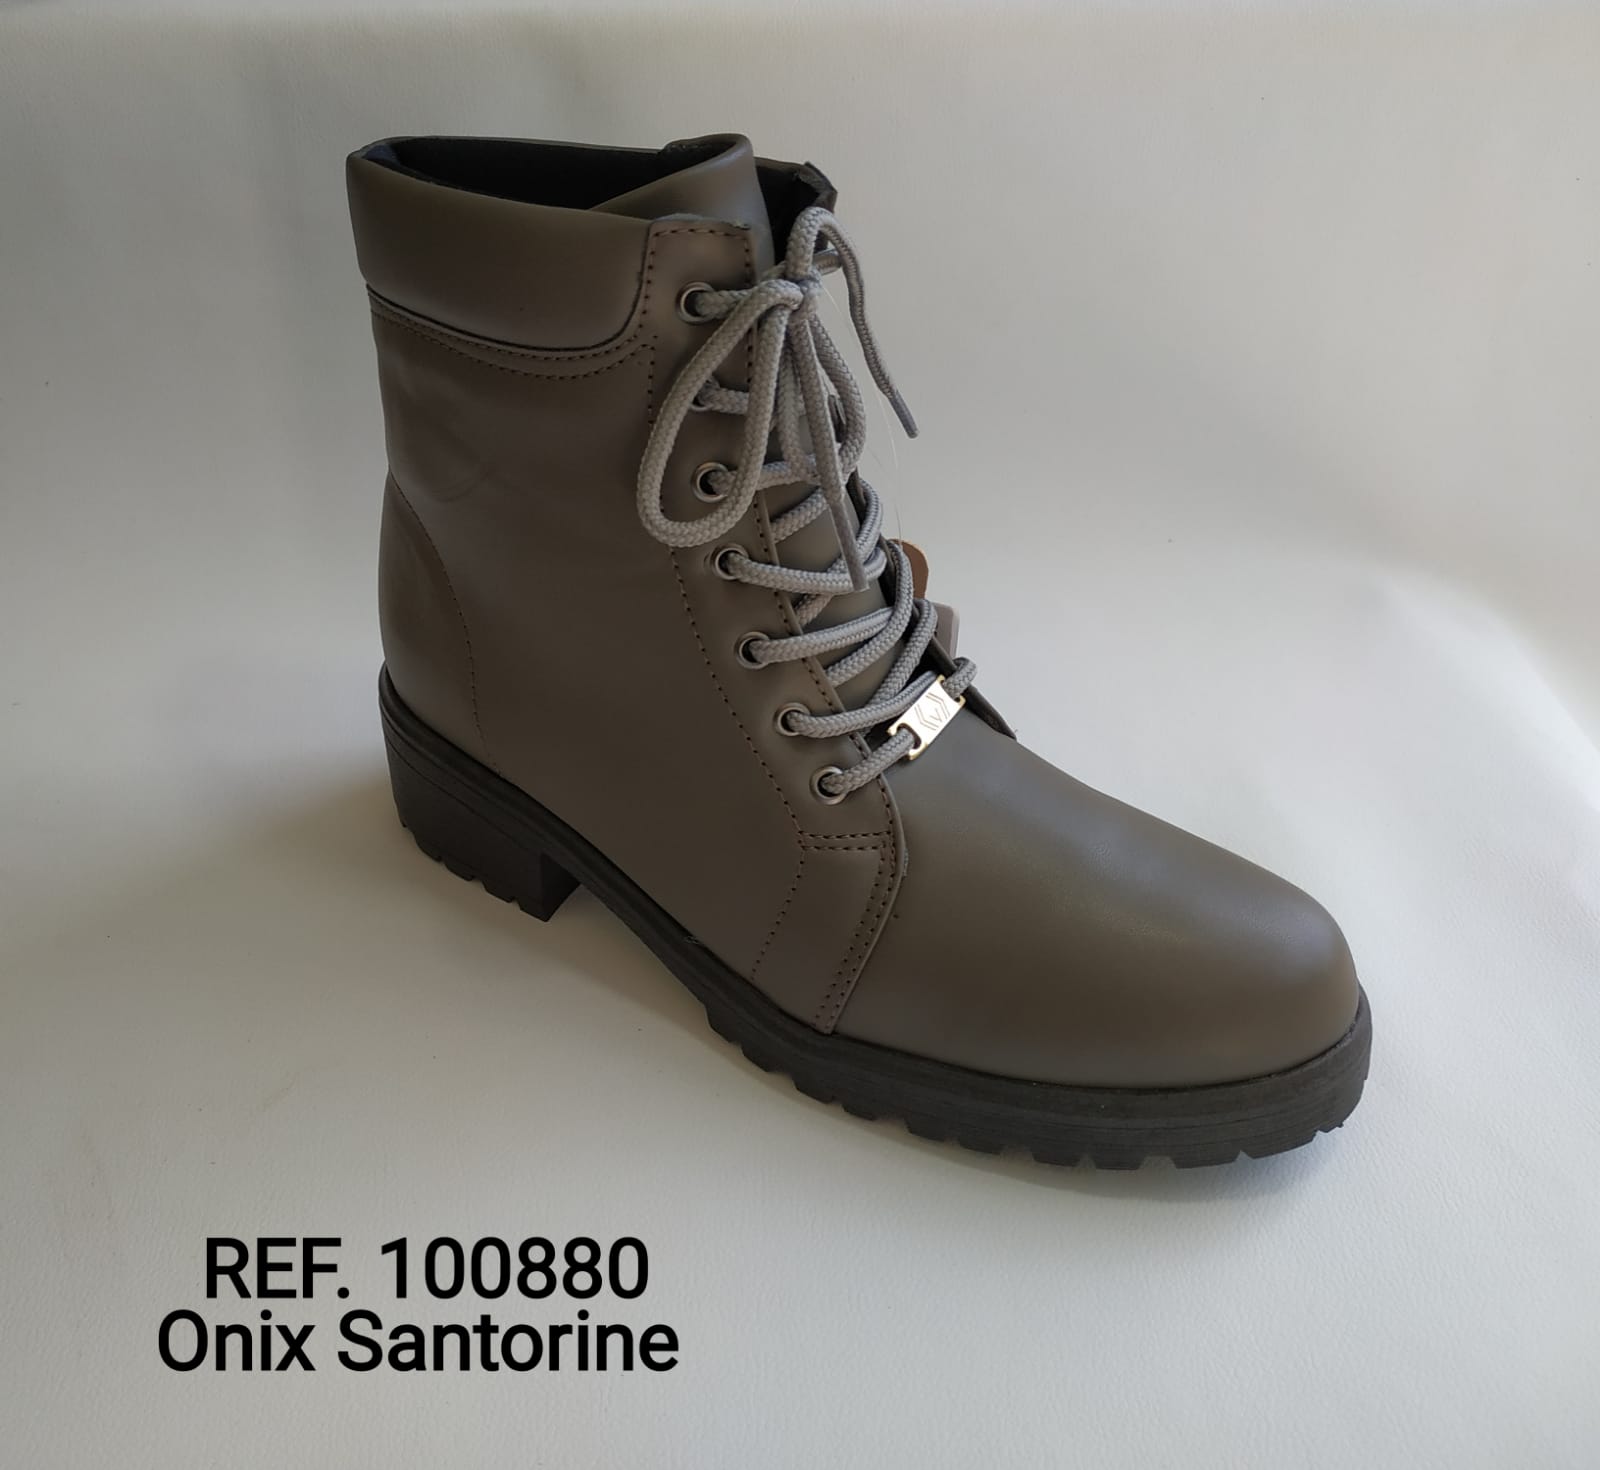 Ref. 100880 Onix Santorine